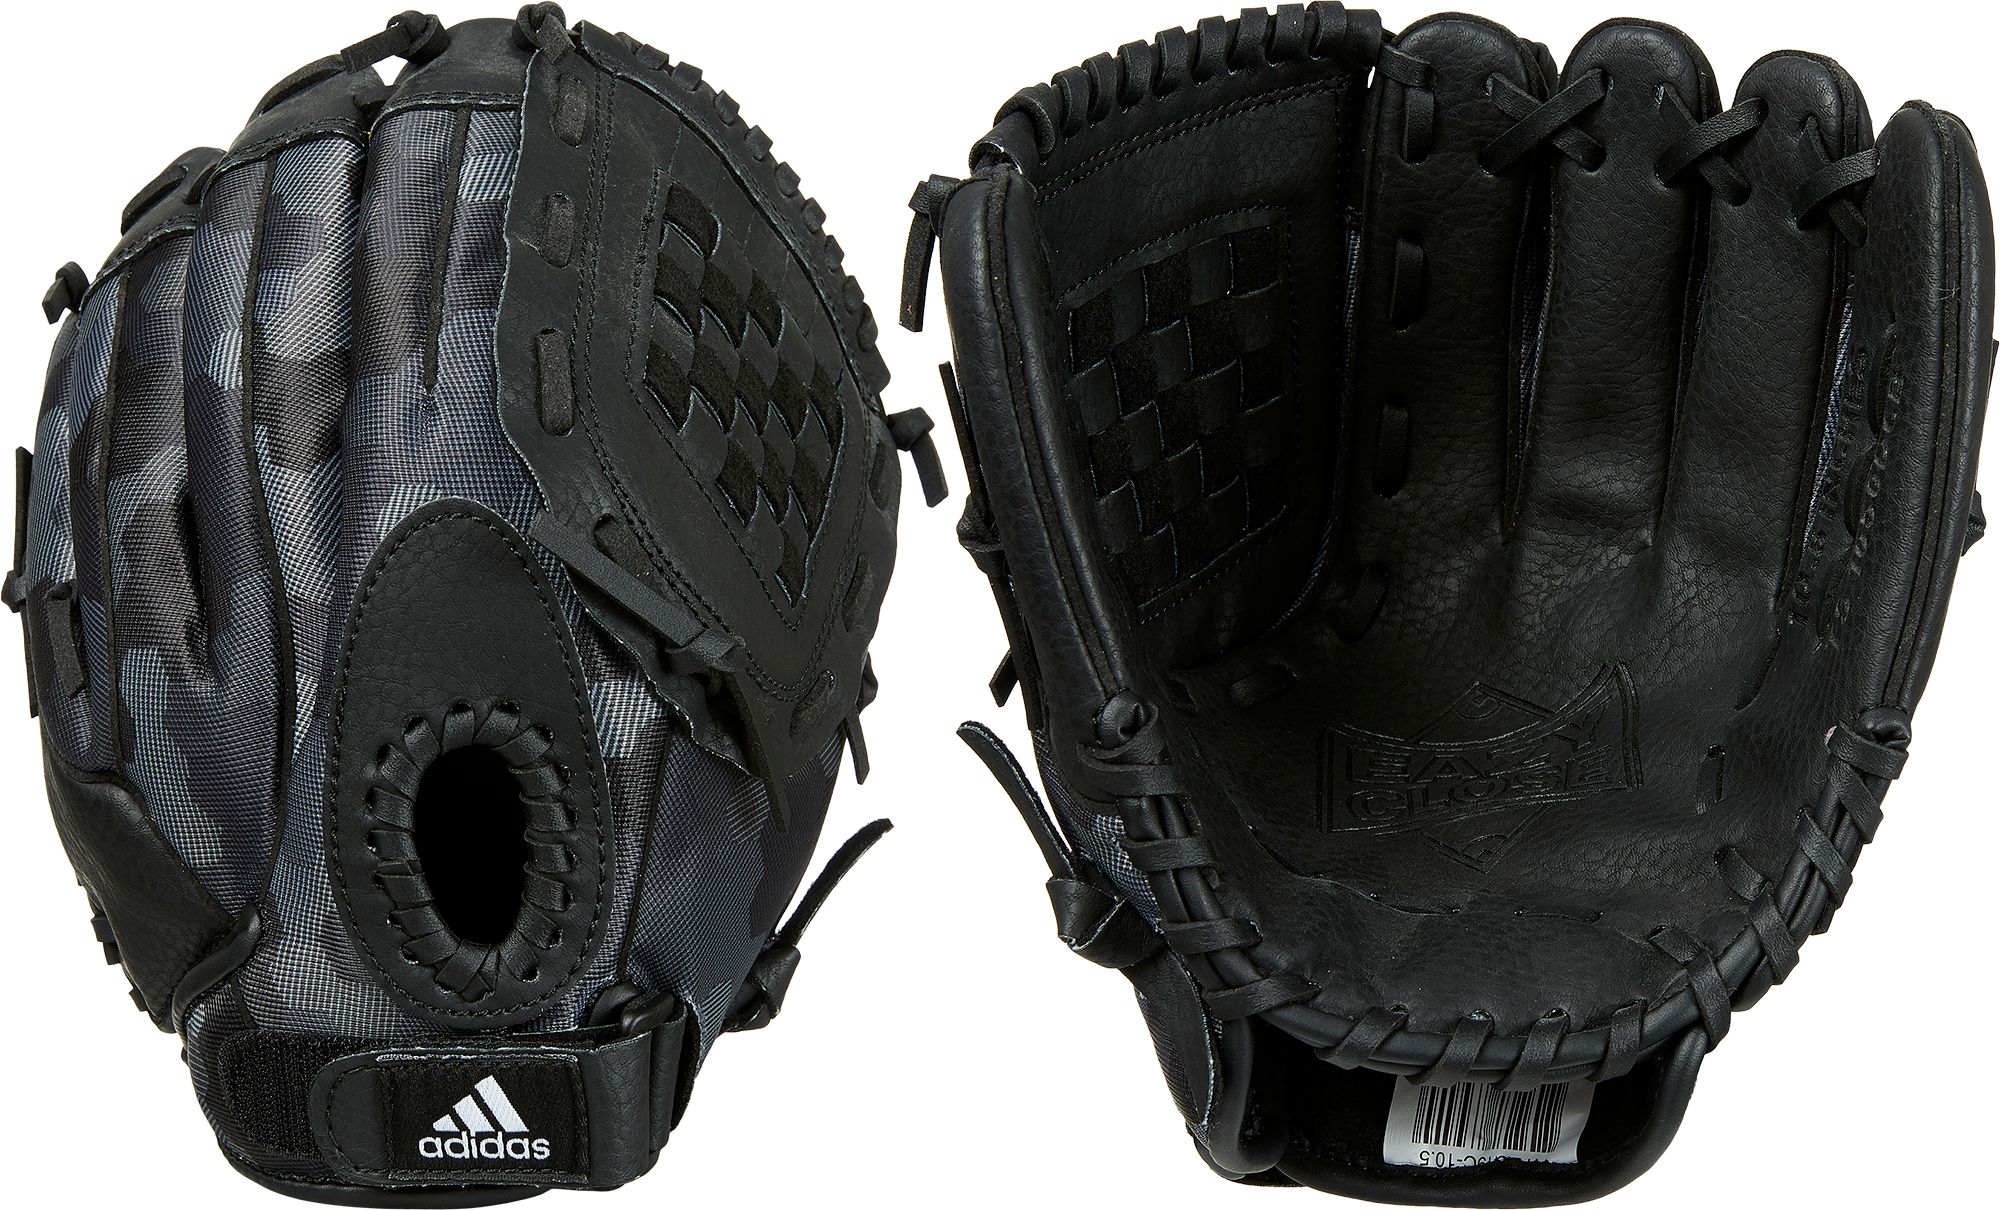 adidas youth baseball glove